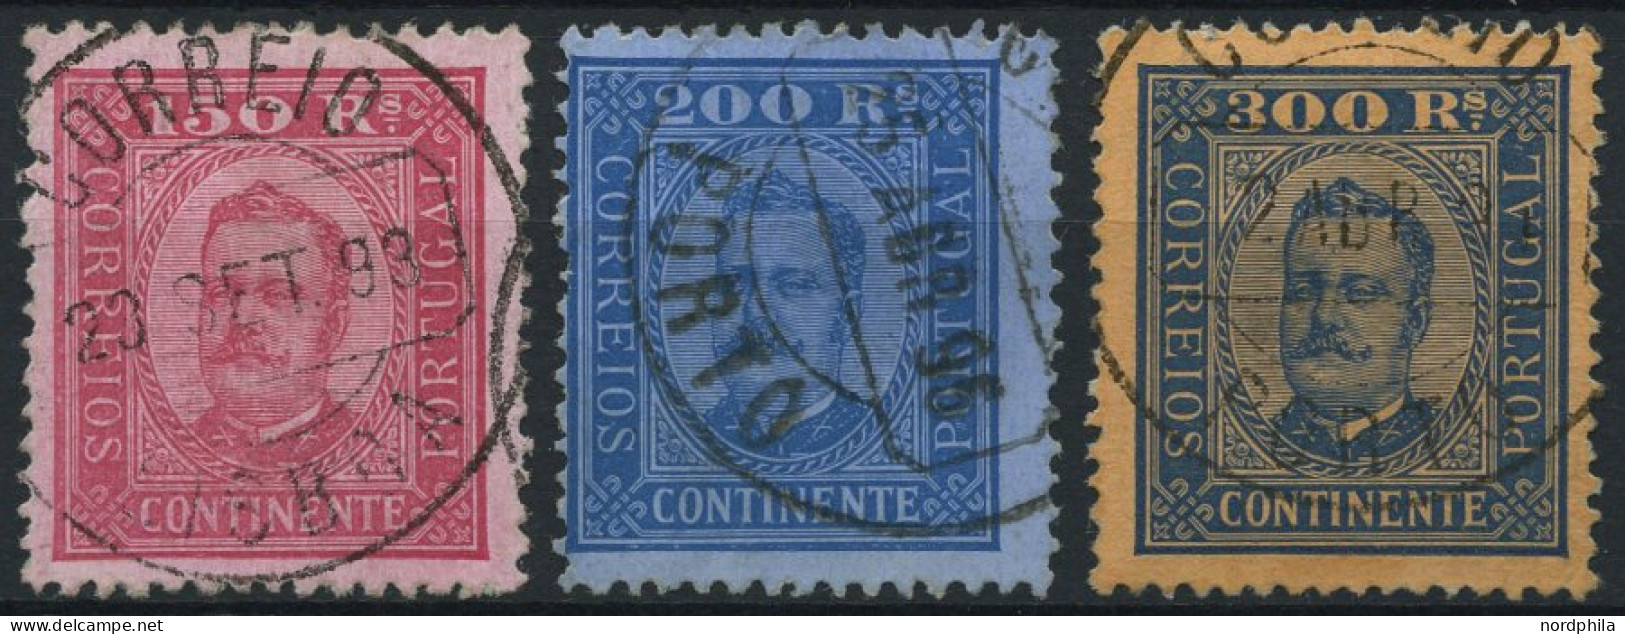 PORTUGAL 75-77 O, 1893, 150 - 300 R. König Carlos I, 3 Werte üblich Gezähnt Pracht, Mi. 235.- - Usati